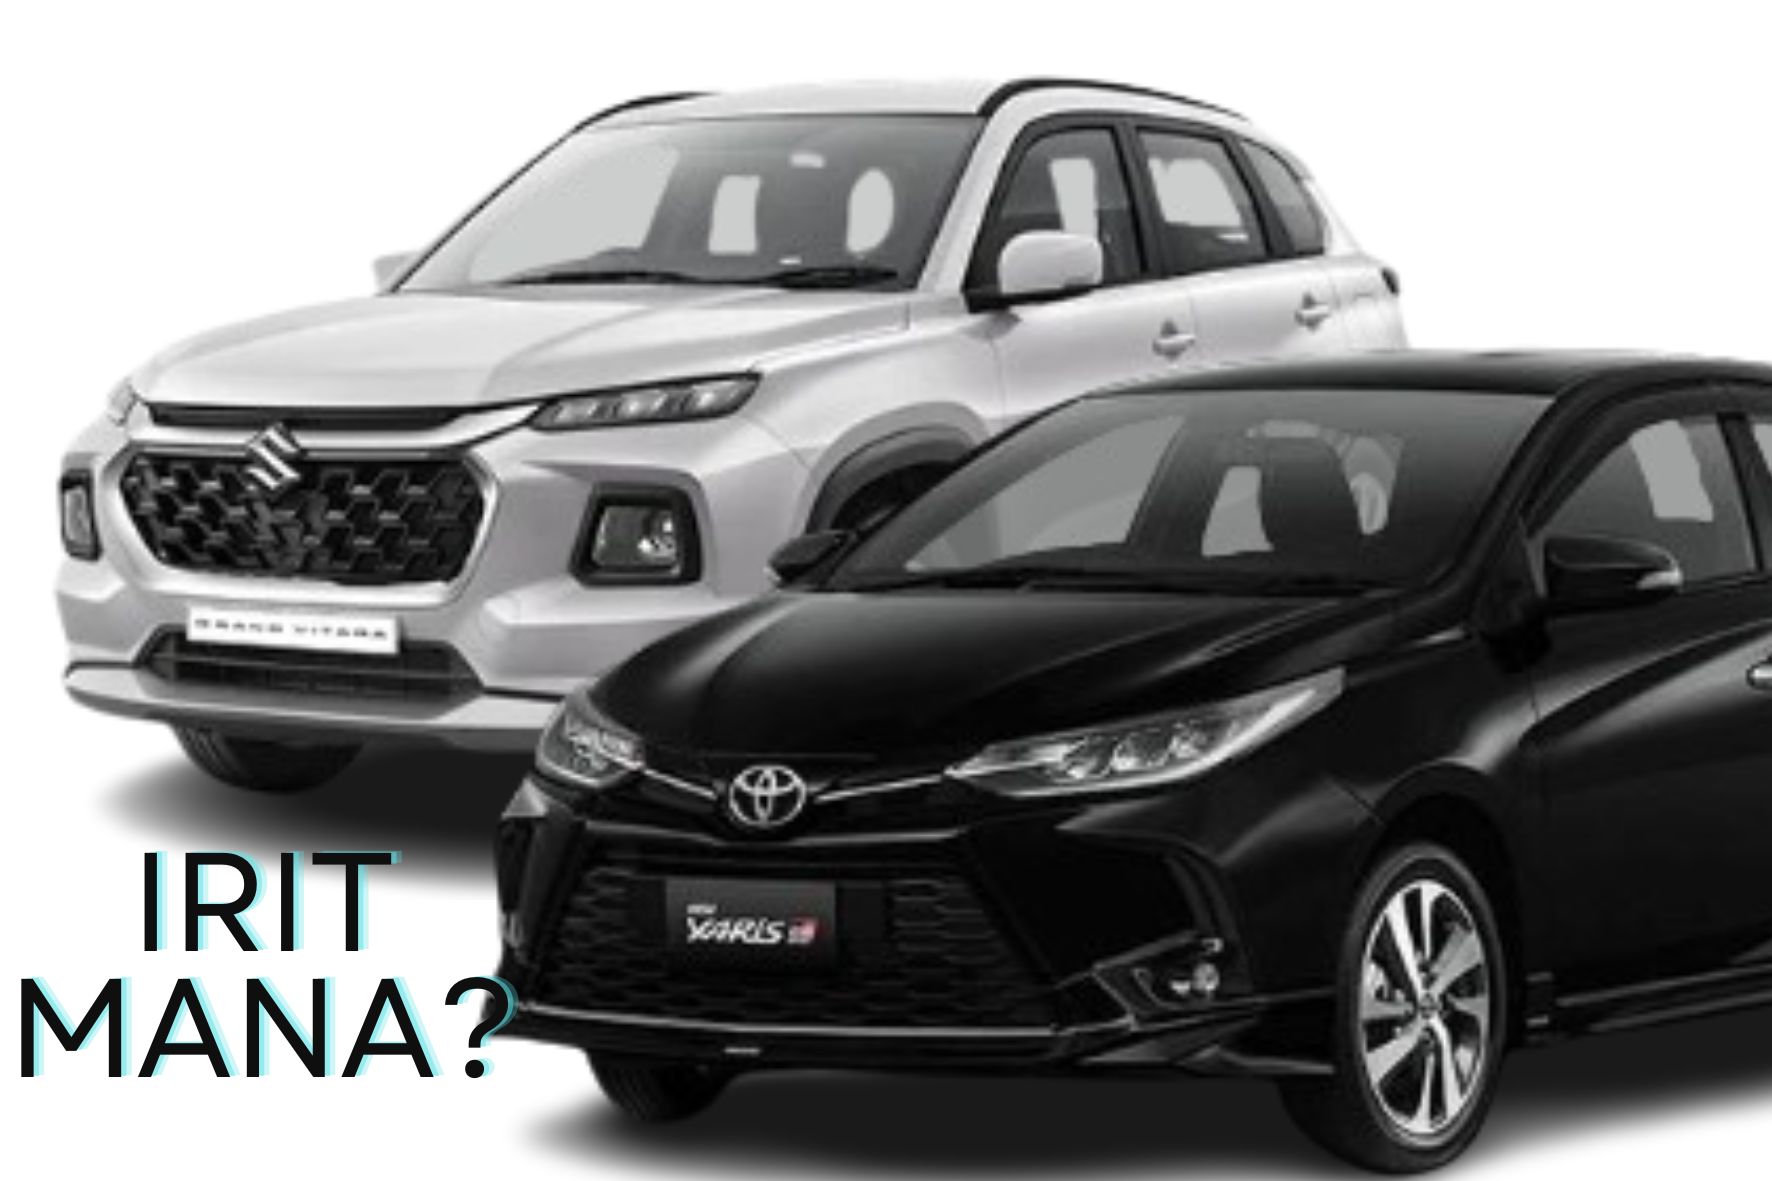 Sama-sama Gendong Mesin Hybrid, Antara Toyota Yaris Cross dengan Suzuki Grand Vitara Paling Irit Mana?